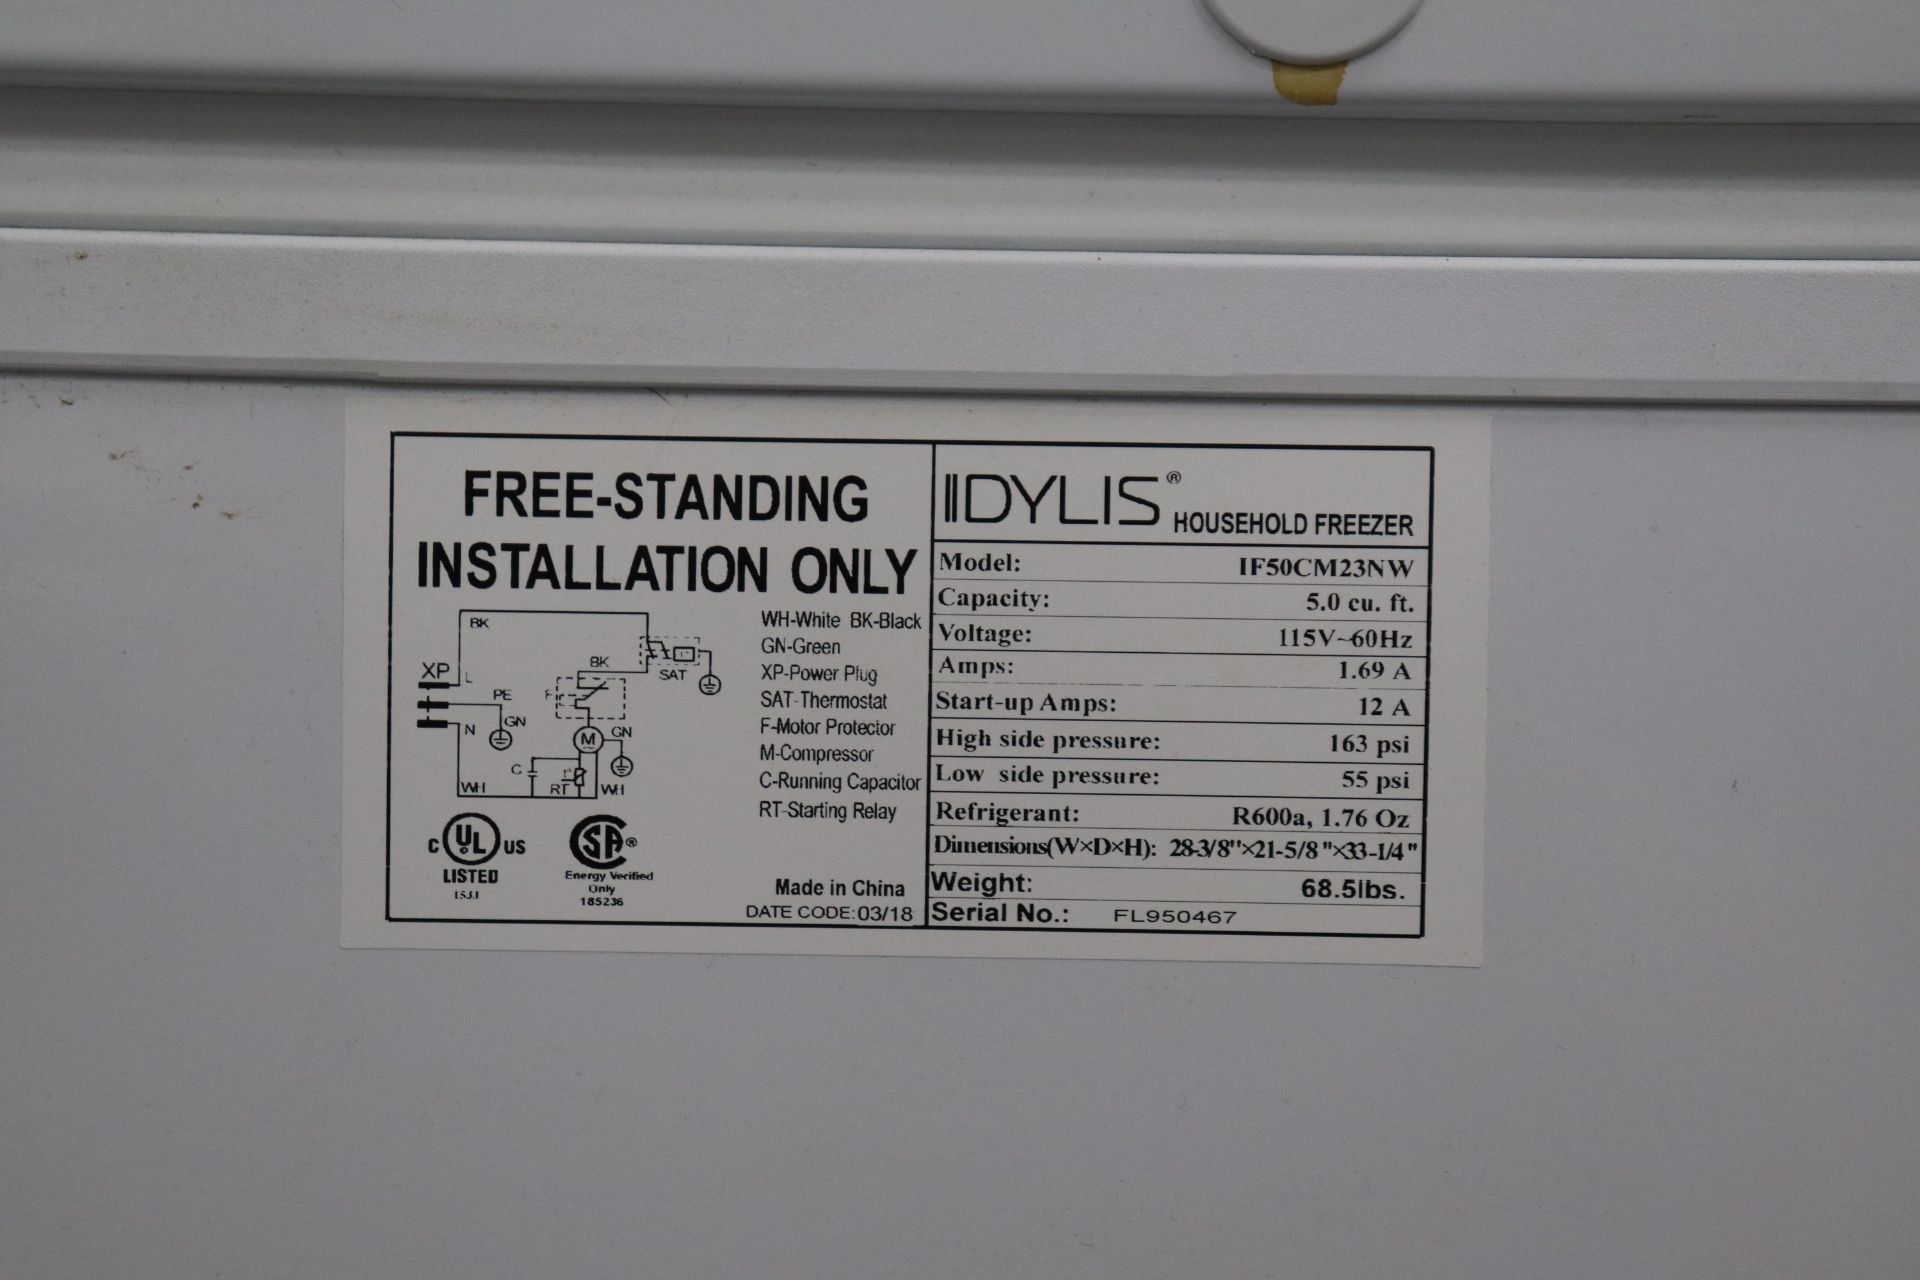 Idylis Household Freezer, 5 cubit foot capacity, 29" x 22" x 33", Model IF50CM23NW, Serial FL950467 - Image 4 of 4